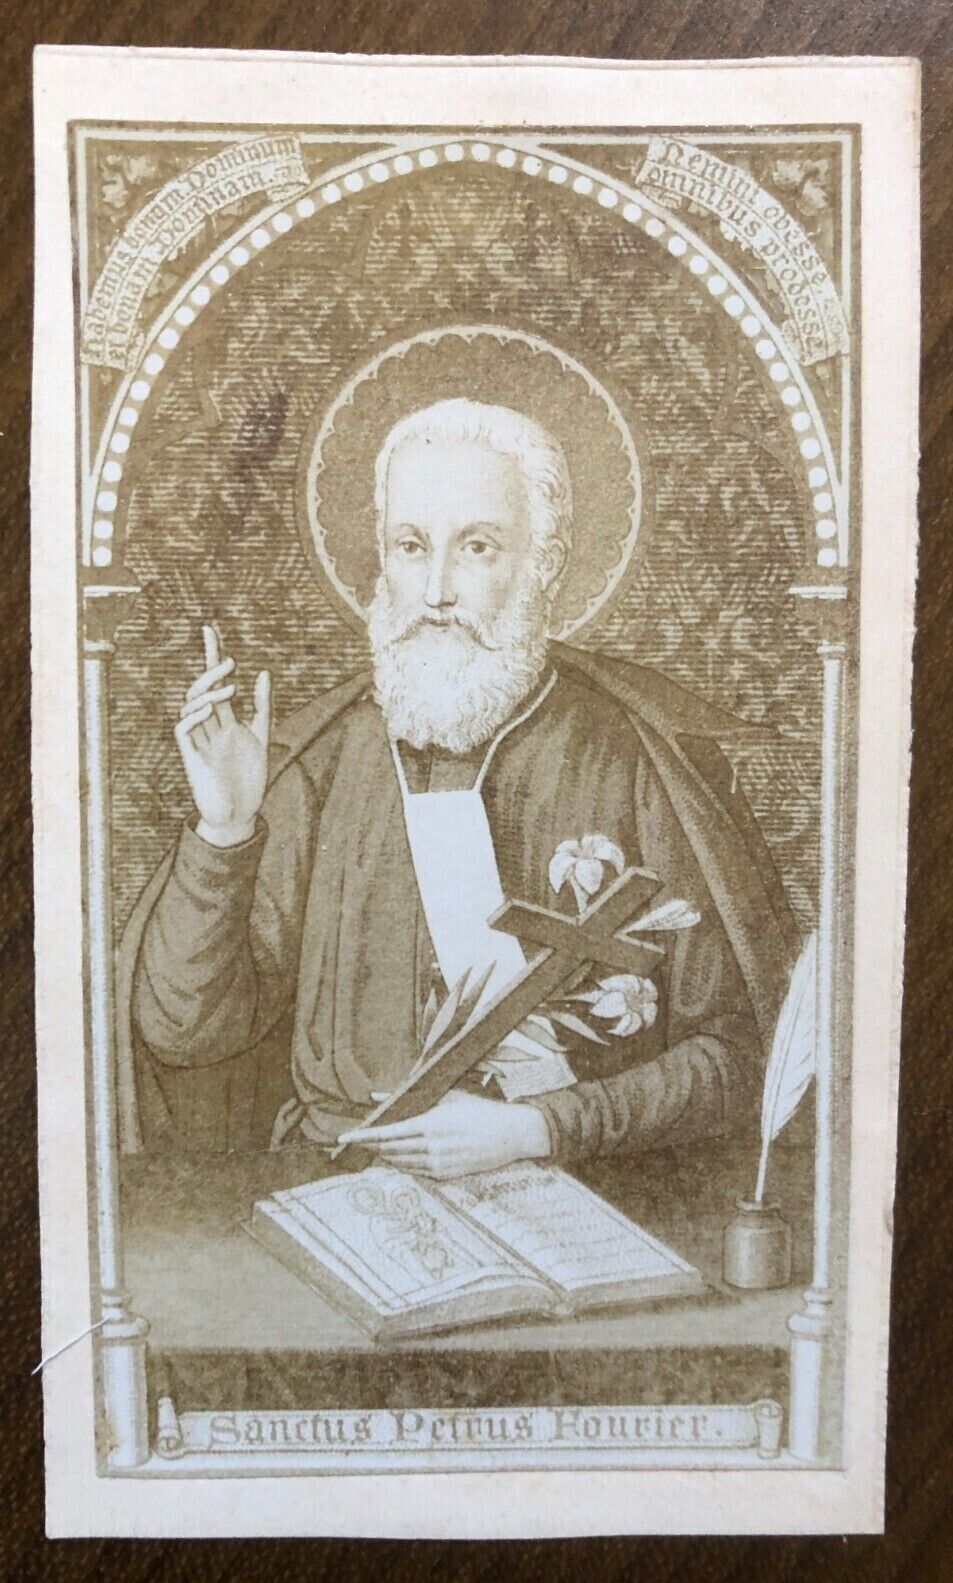 VINTAGE 1899 Sanctus Petrus Fourier RELIGIOUS/SPIRITUAL CARD